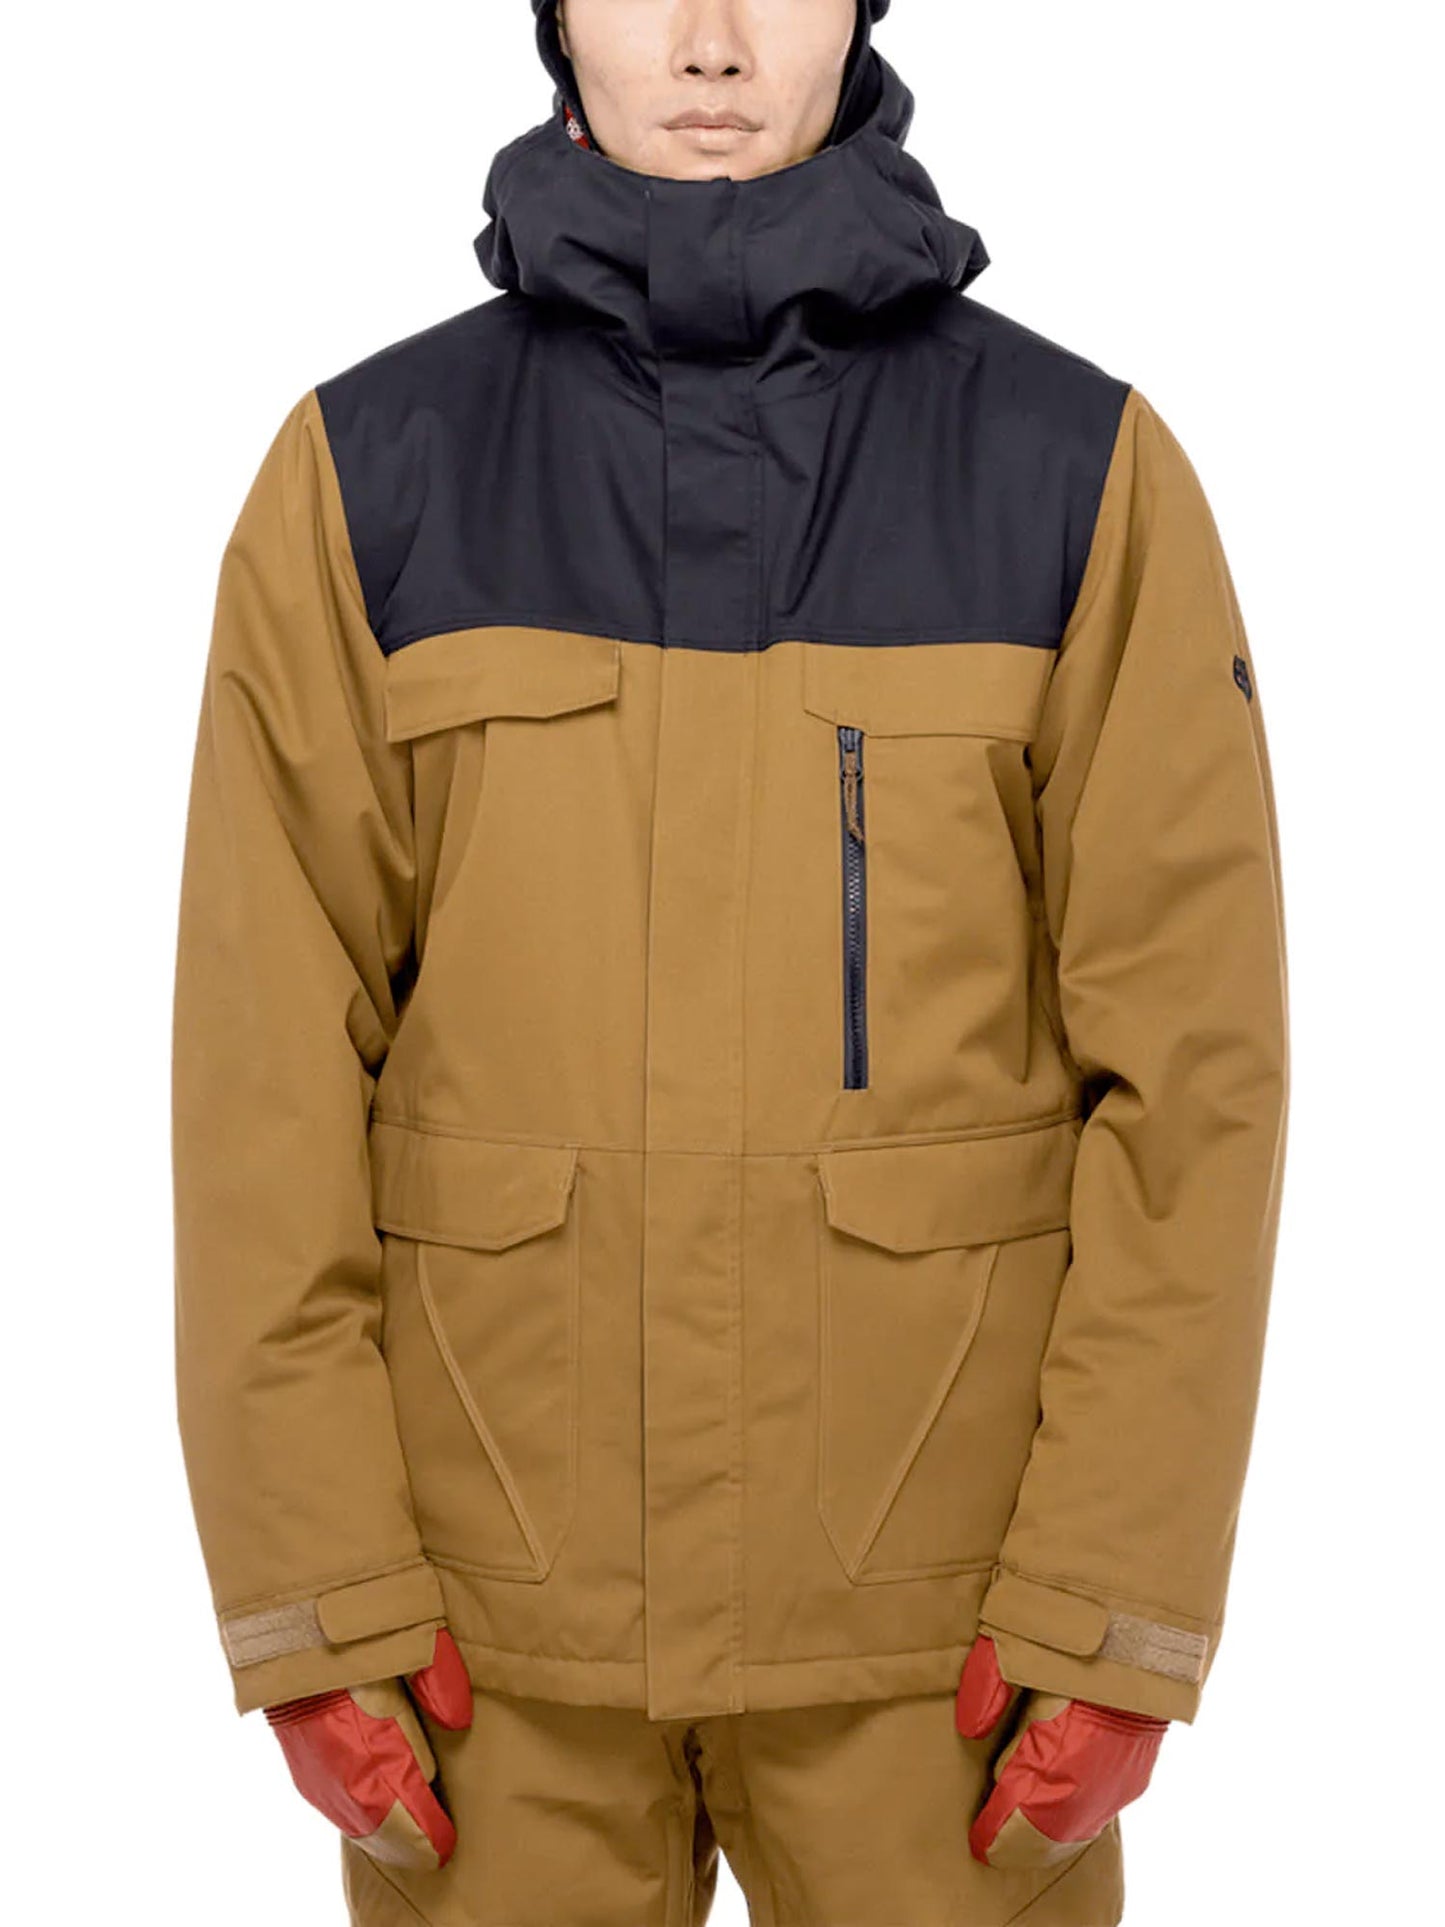 Mens' 686 Infinity snowboard jacket, black and brown